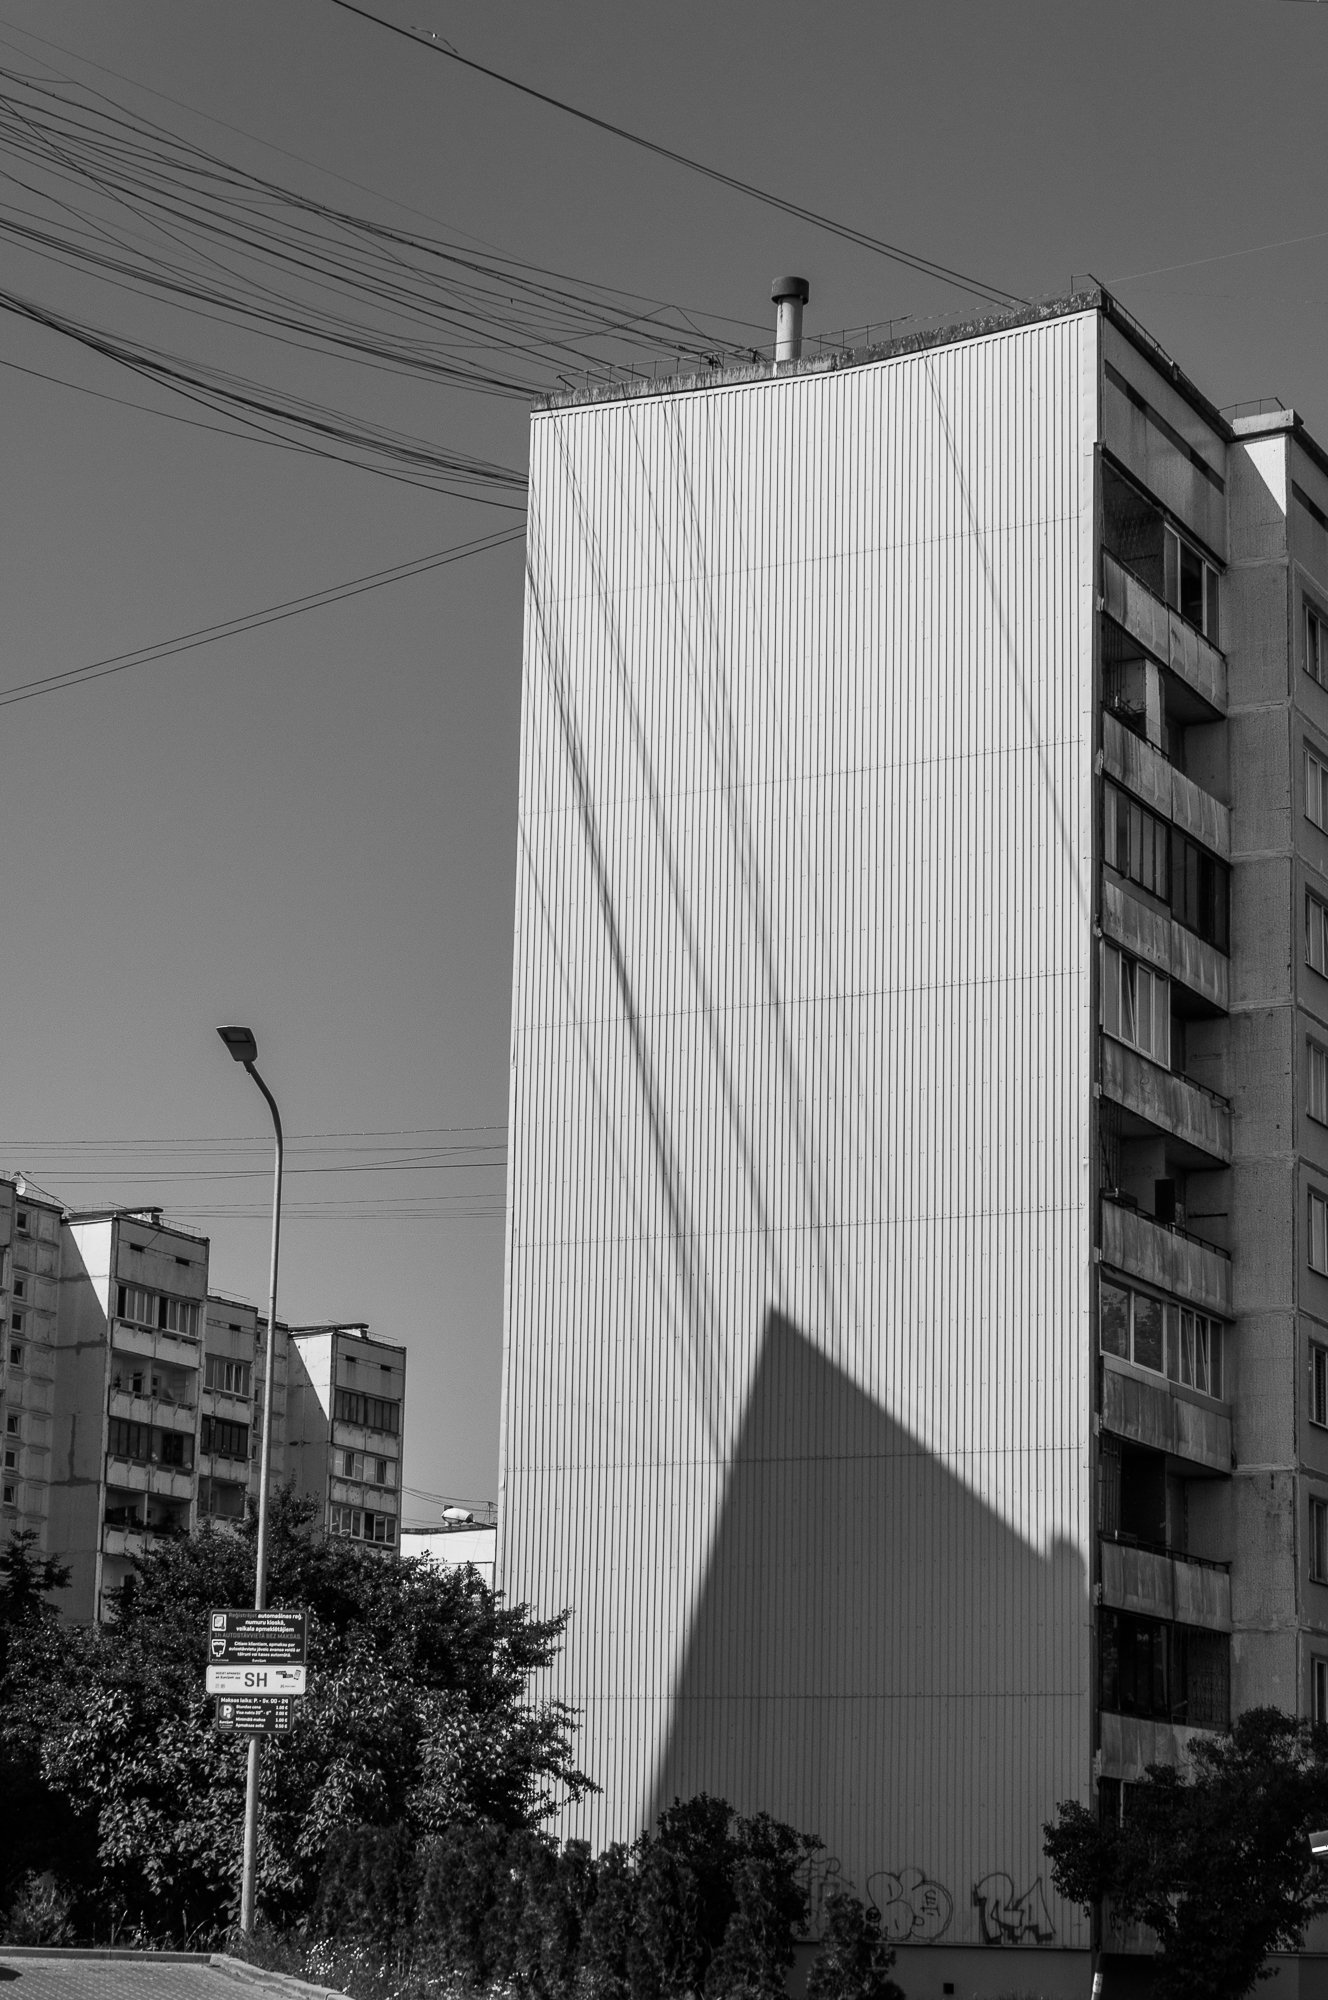 Adam Mazek Photography 2021. Post: "What do I believe in?" Minimalism. Riga street photography. Shadow.